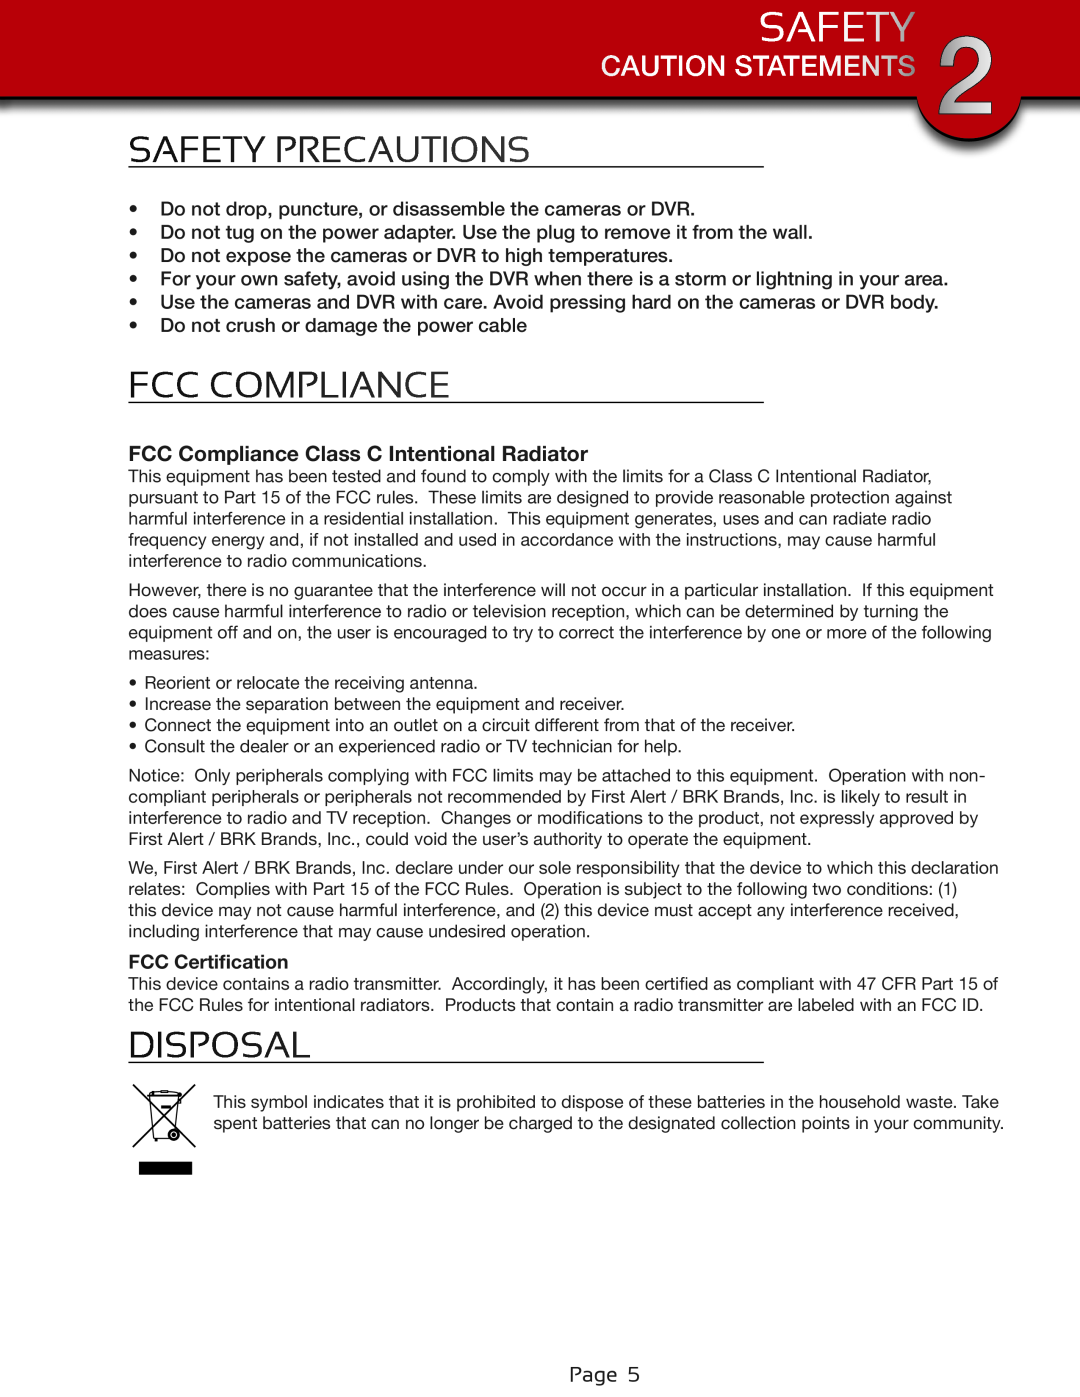 First Alert DWS-471, DWS-472 Safety Precautions, Fcc Compliance, Disposal, Caution Statements, FCC Certification 